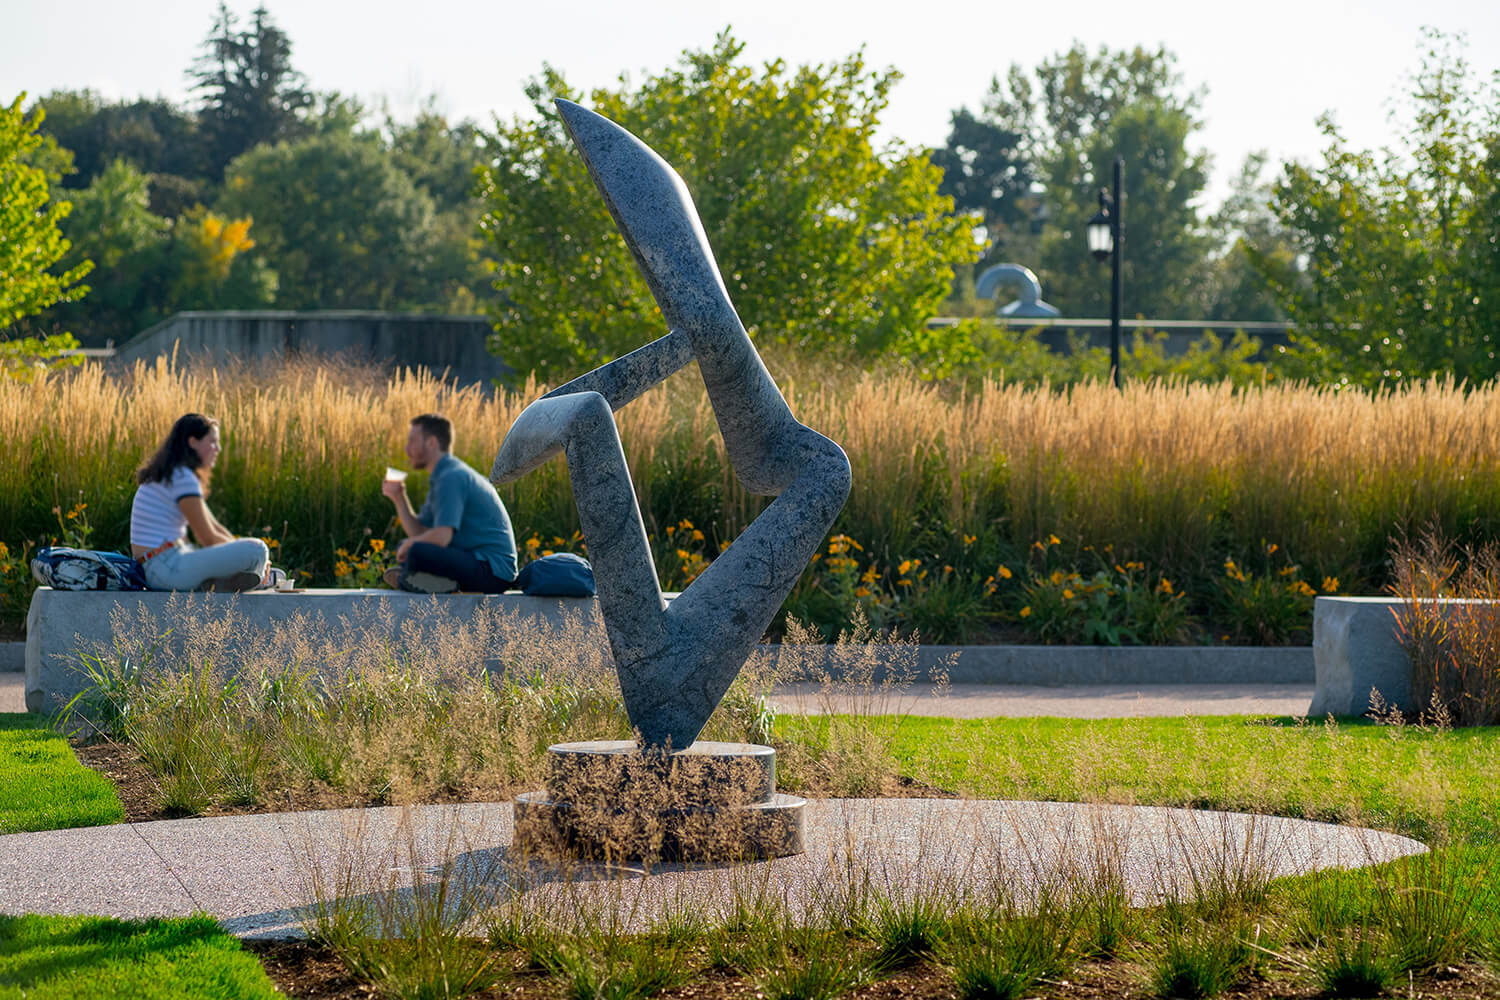 Students sitting near a sculpture by the sculpture entitled "Arete Blu" by Richard Erdman